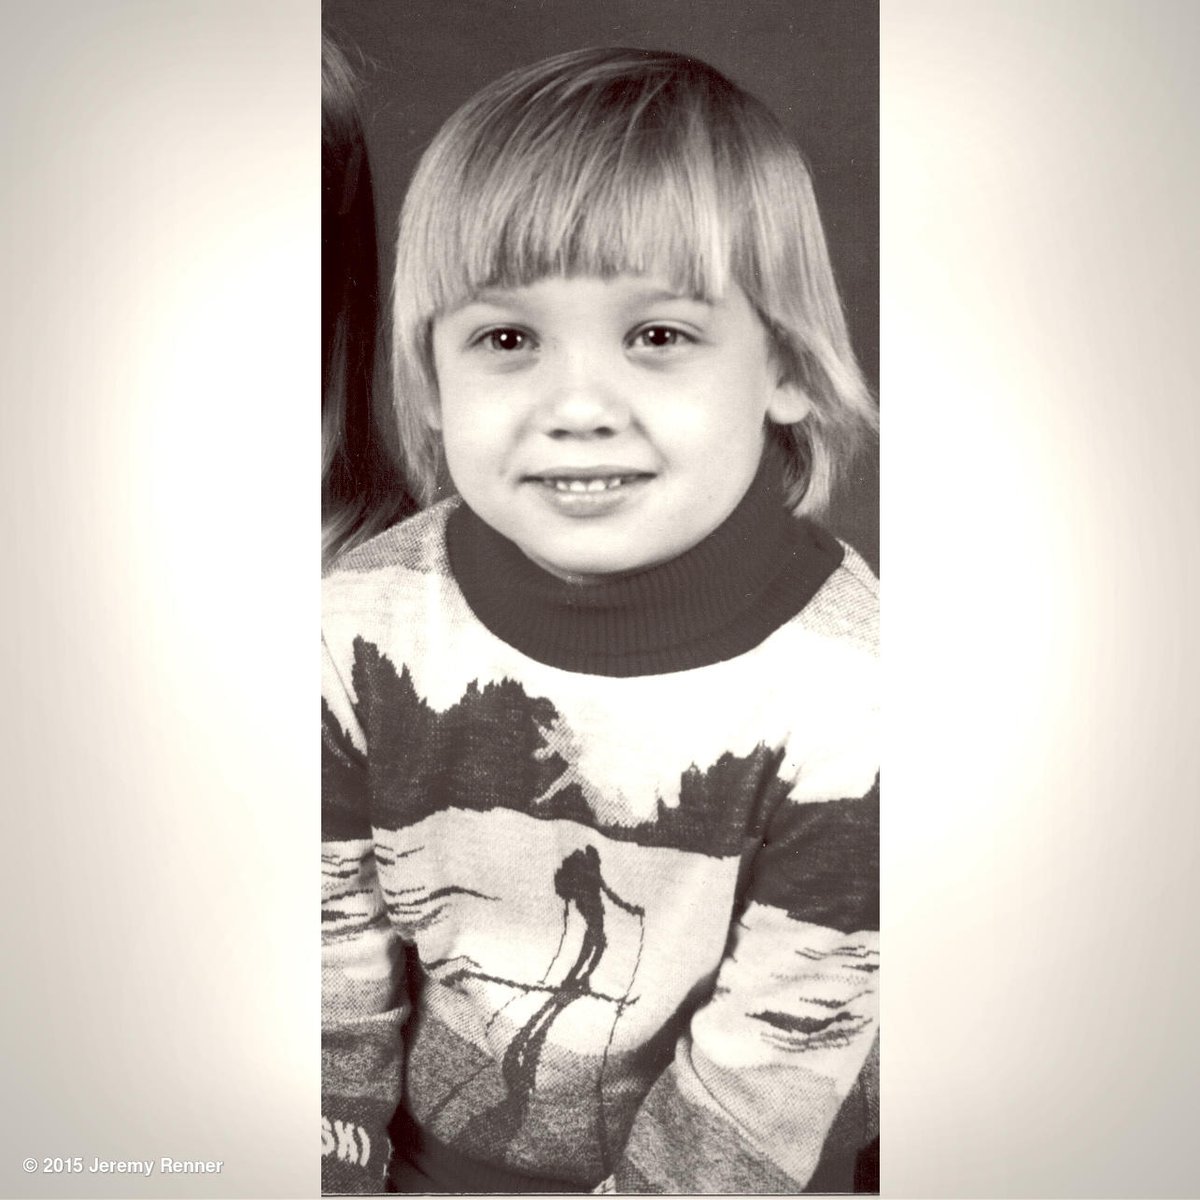 Christmas sweater. #thanksmom #skibum #haircut #isthatmydaughter? https://t.co/ePOxyHwdVJ